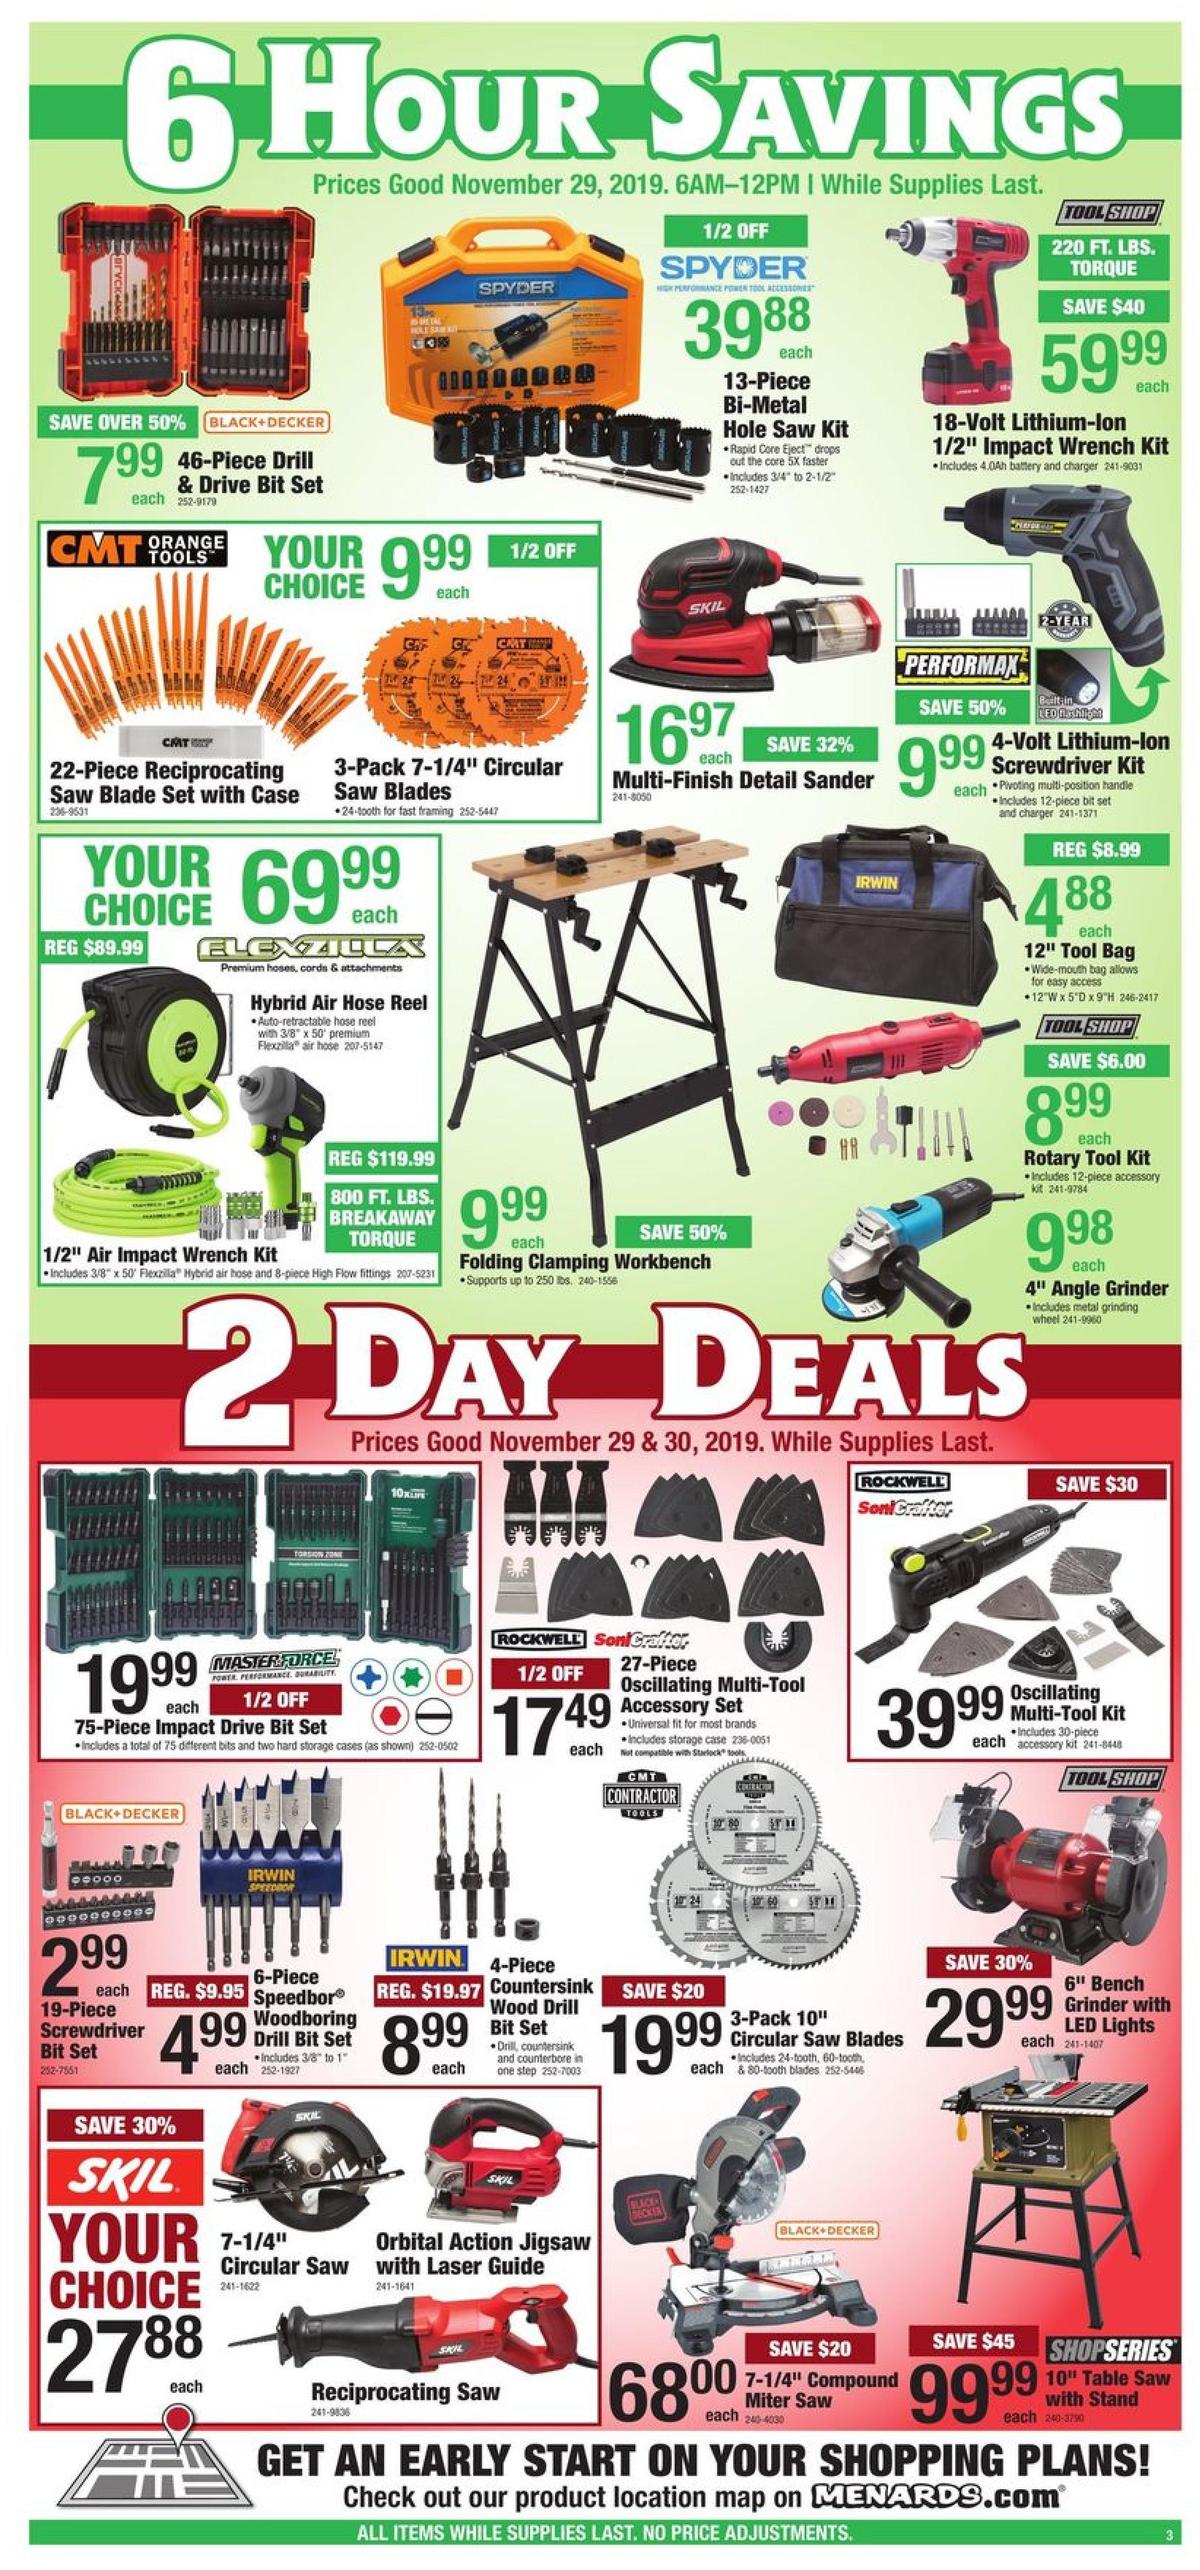 Menards Black Friday Sale Weekly Ad from November 29